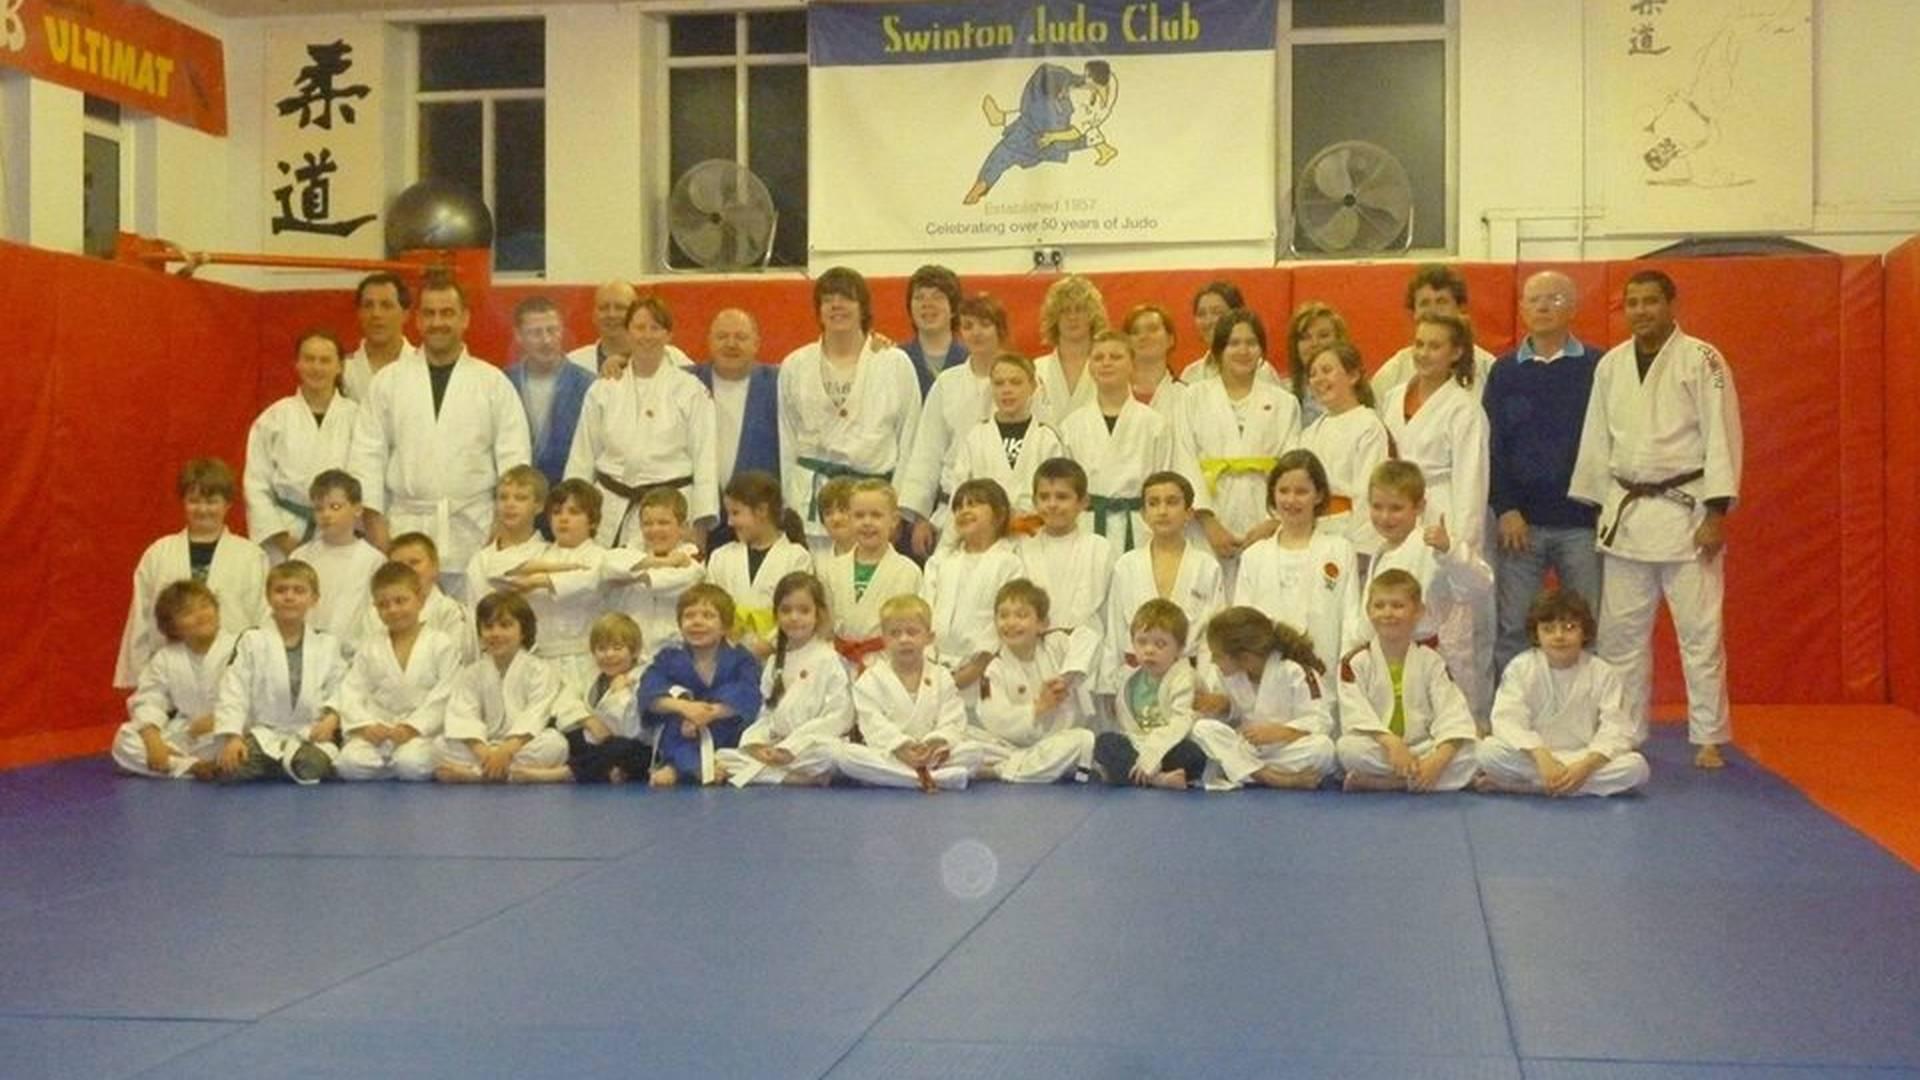 Swinton Judo Club photo